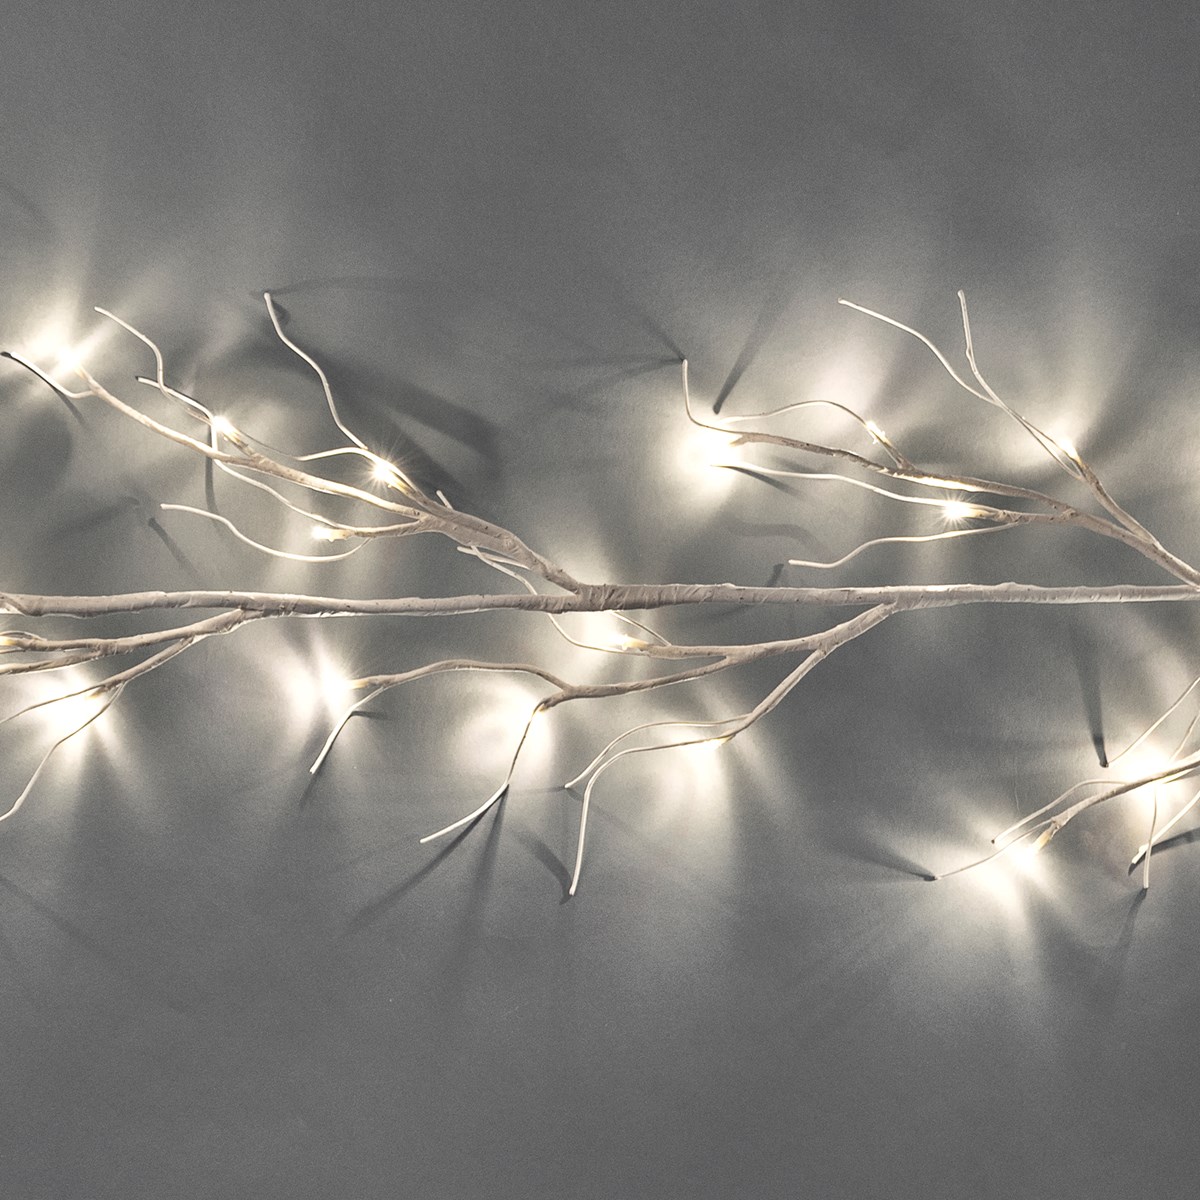 Lighted Birch Twig Garland - Wire, Plastic, Cord 